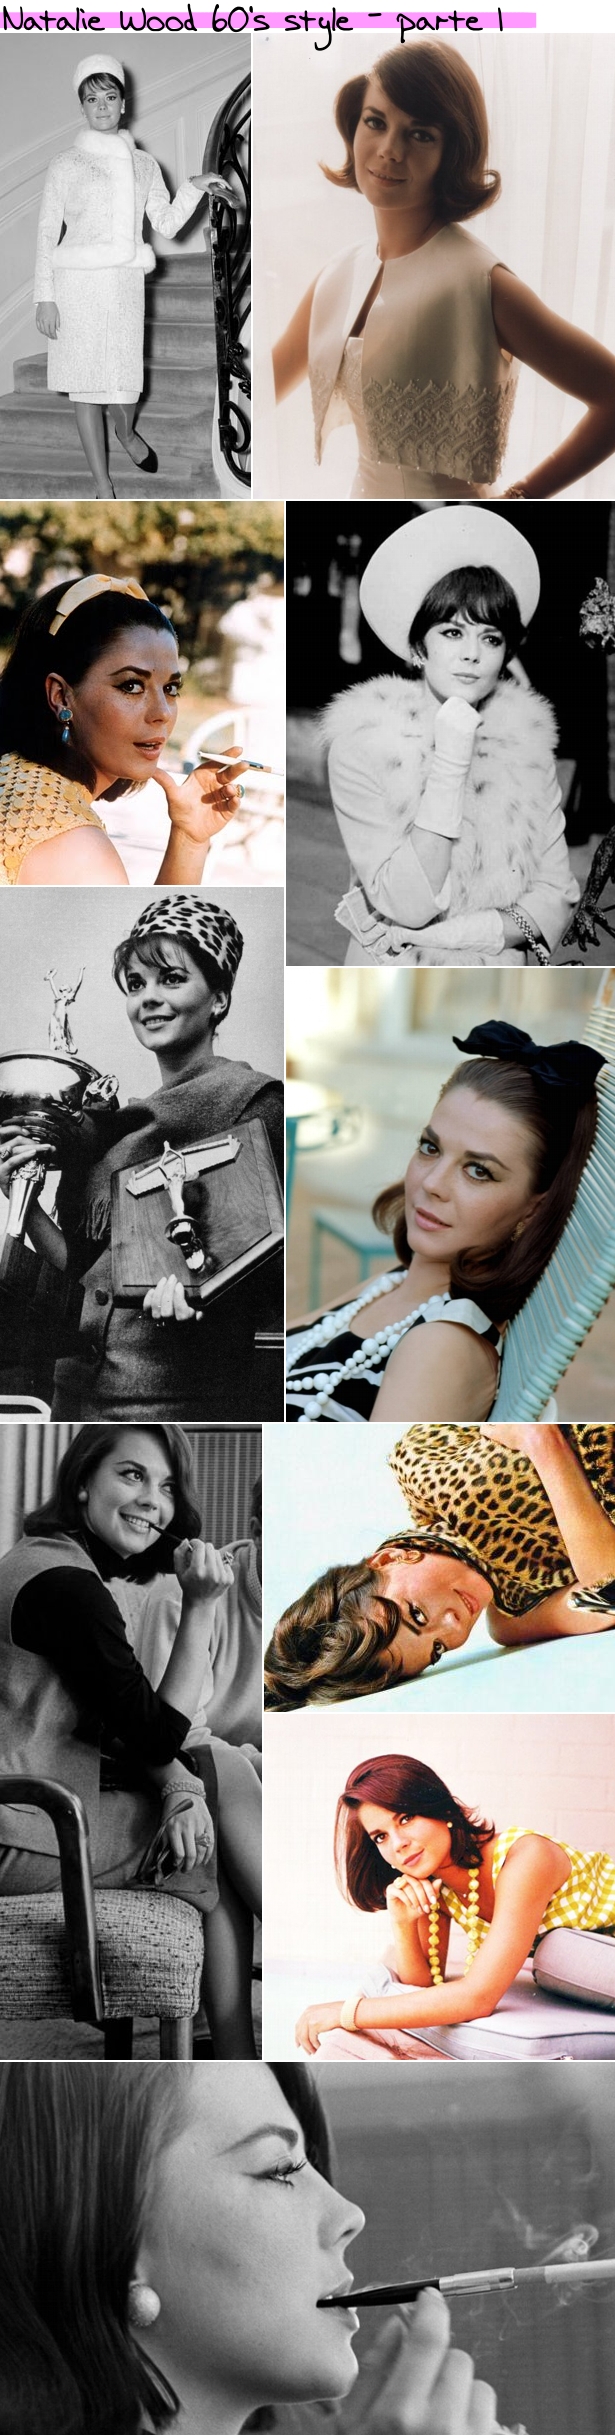 Natalie Wood 60s style parte 1 Blog da Hilde celebra a beleza e o estilo da eterna musa Natalie Wood!